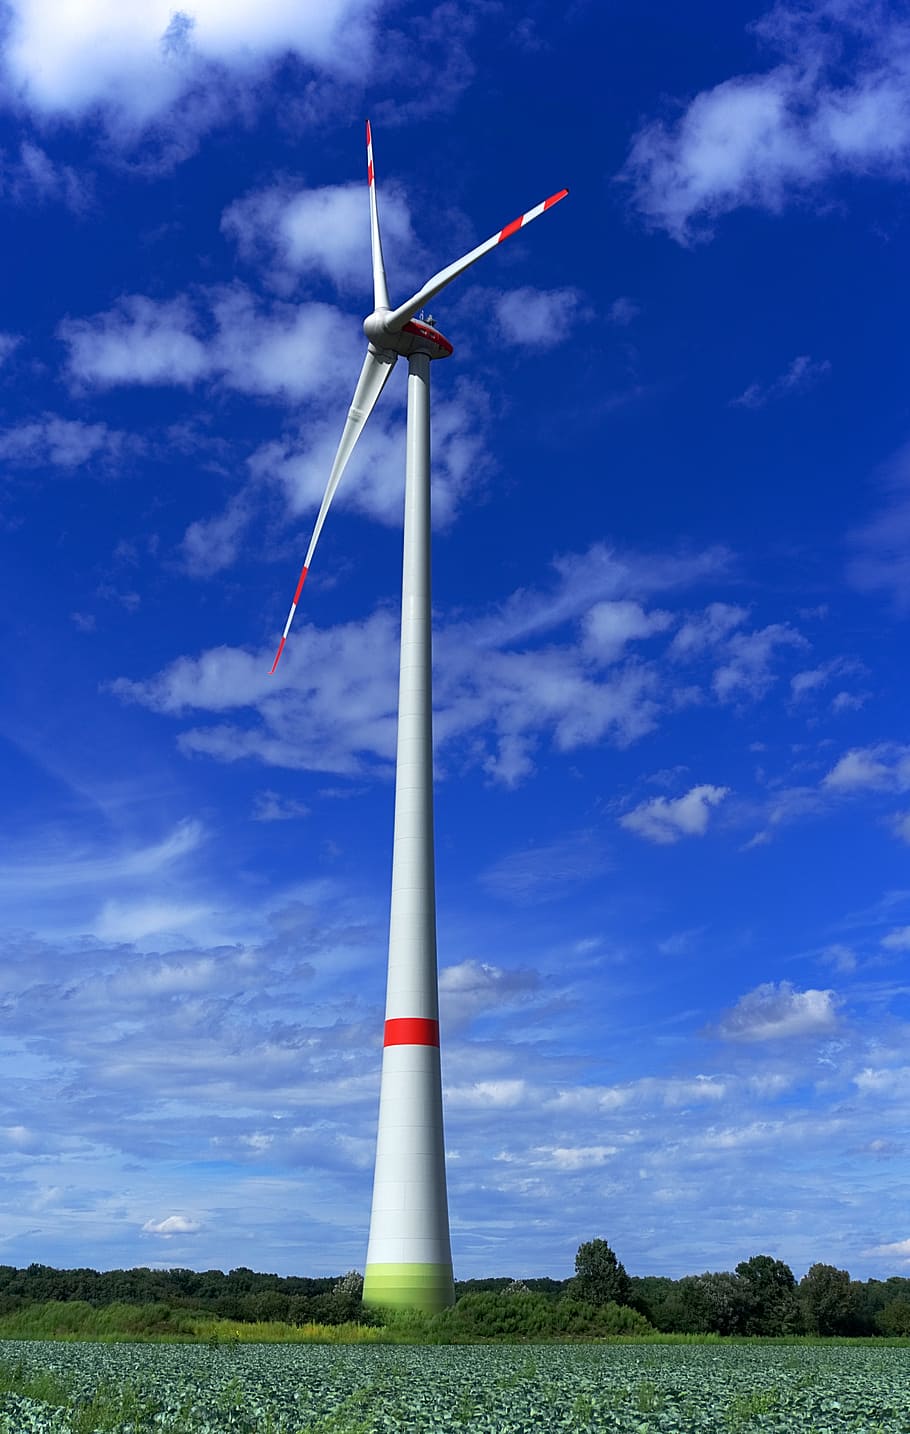 pinwheel, wind power, energy, blue, environmental technology, rotor, current, turn, power generation, wind energy